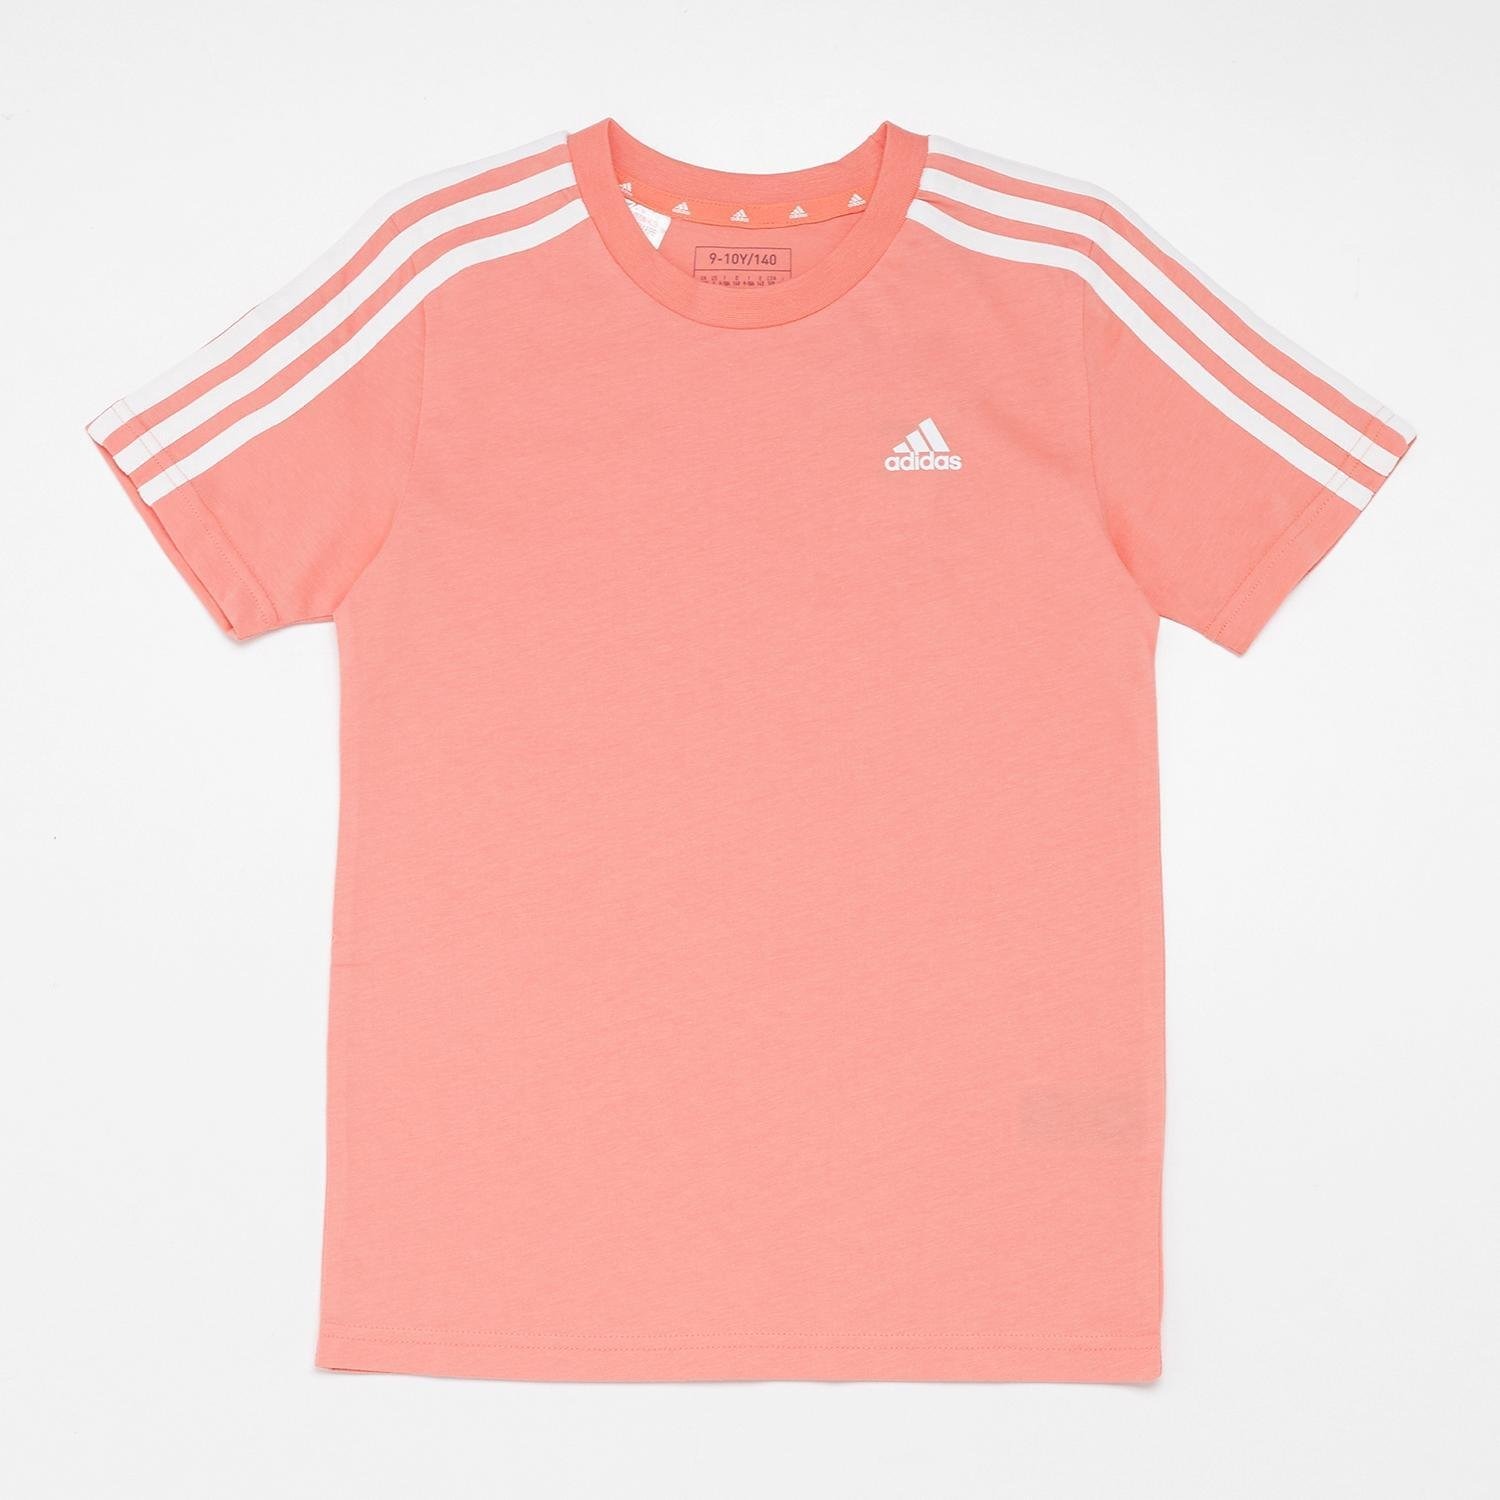 adidas Adidas 3-stripes shirt oranje/roze kinderen kinderen